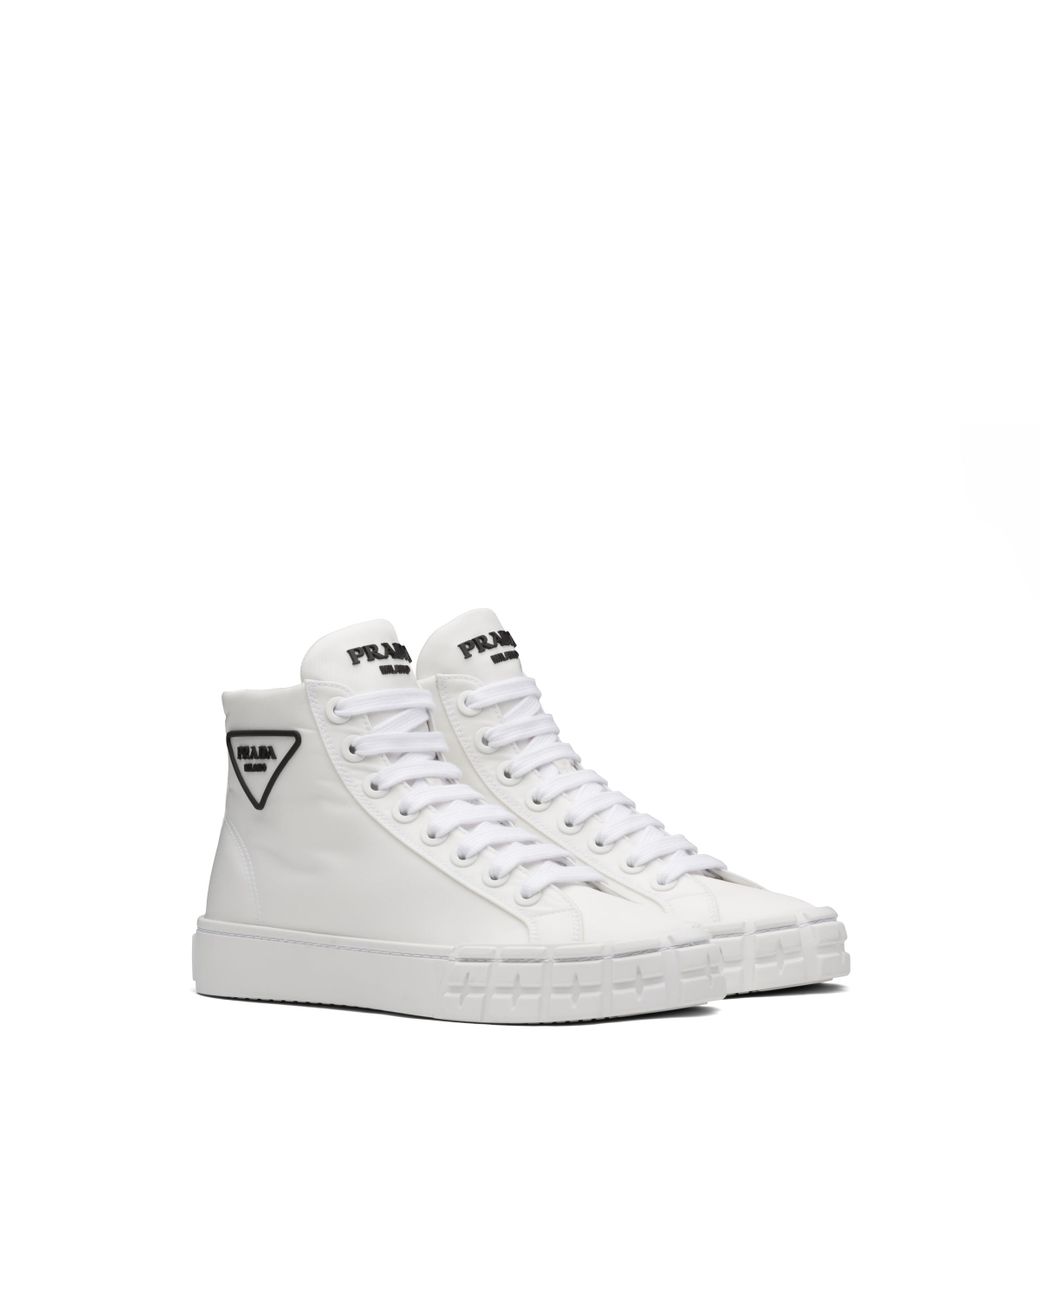 Prada Synthetic Wheel Re-nylon Gabardine Sneakers in White - Lyst